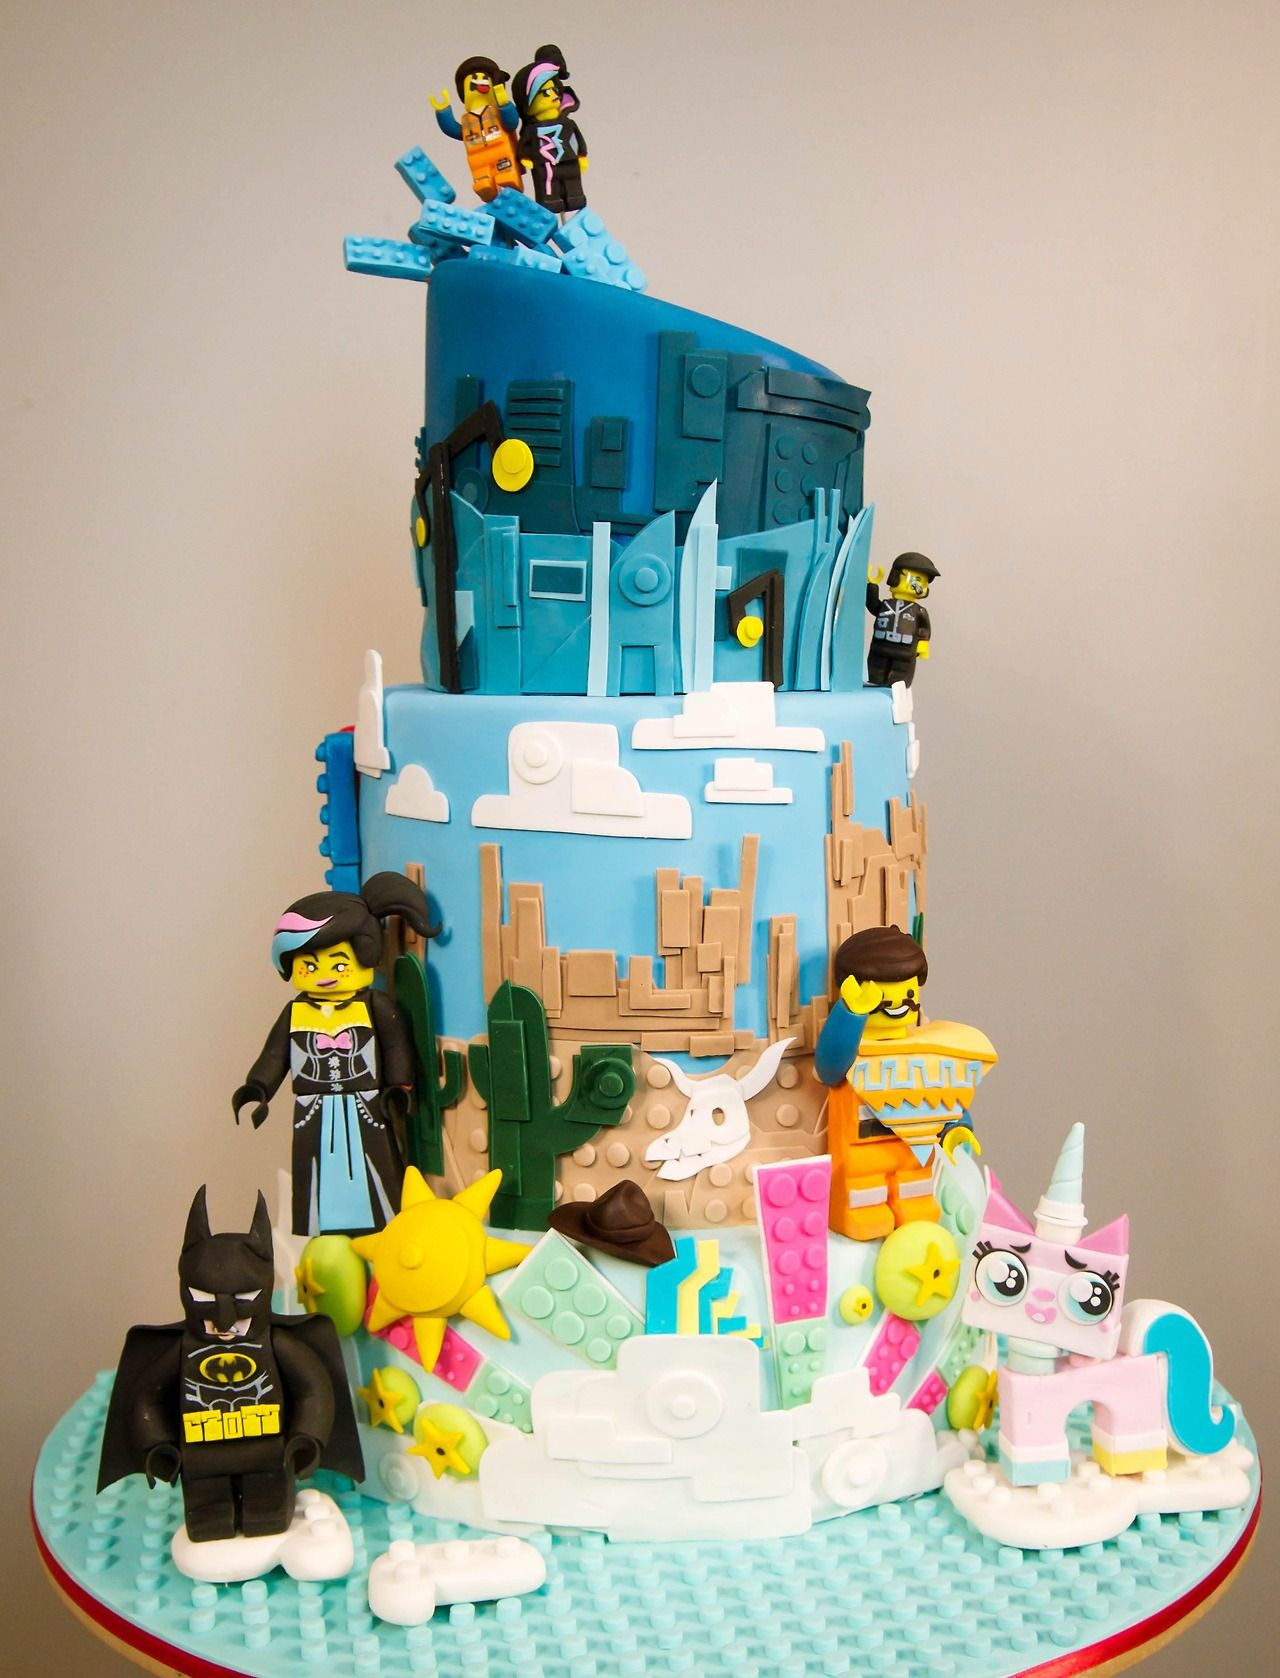 Lego Movie Birthday Cake
 The LEGO Movie cake to end all LEGO Movie cakes With